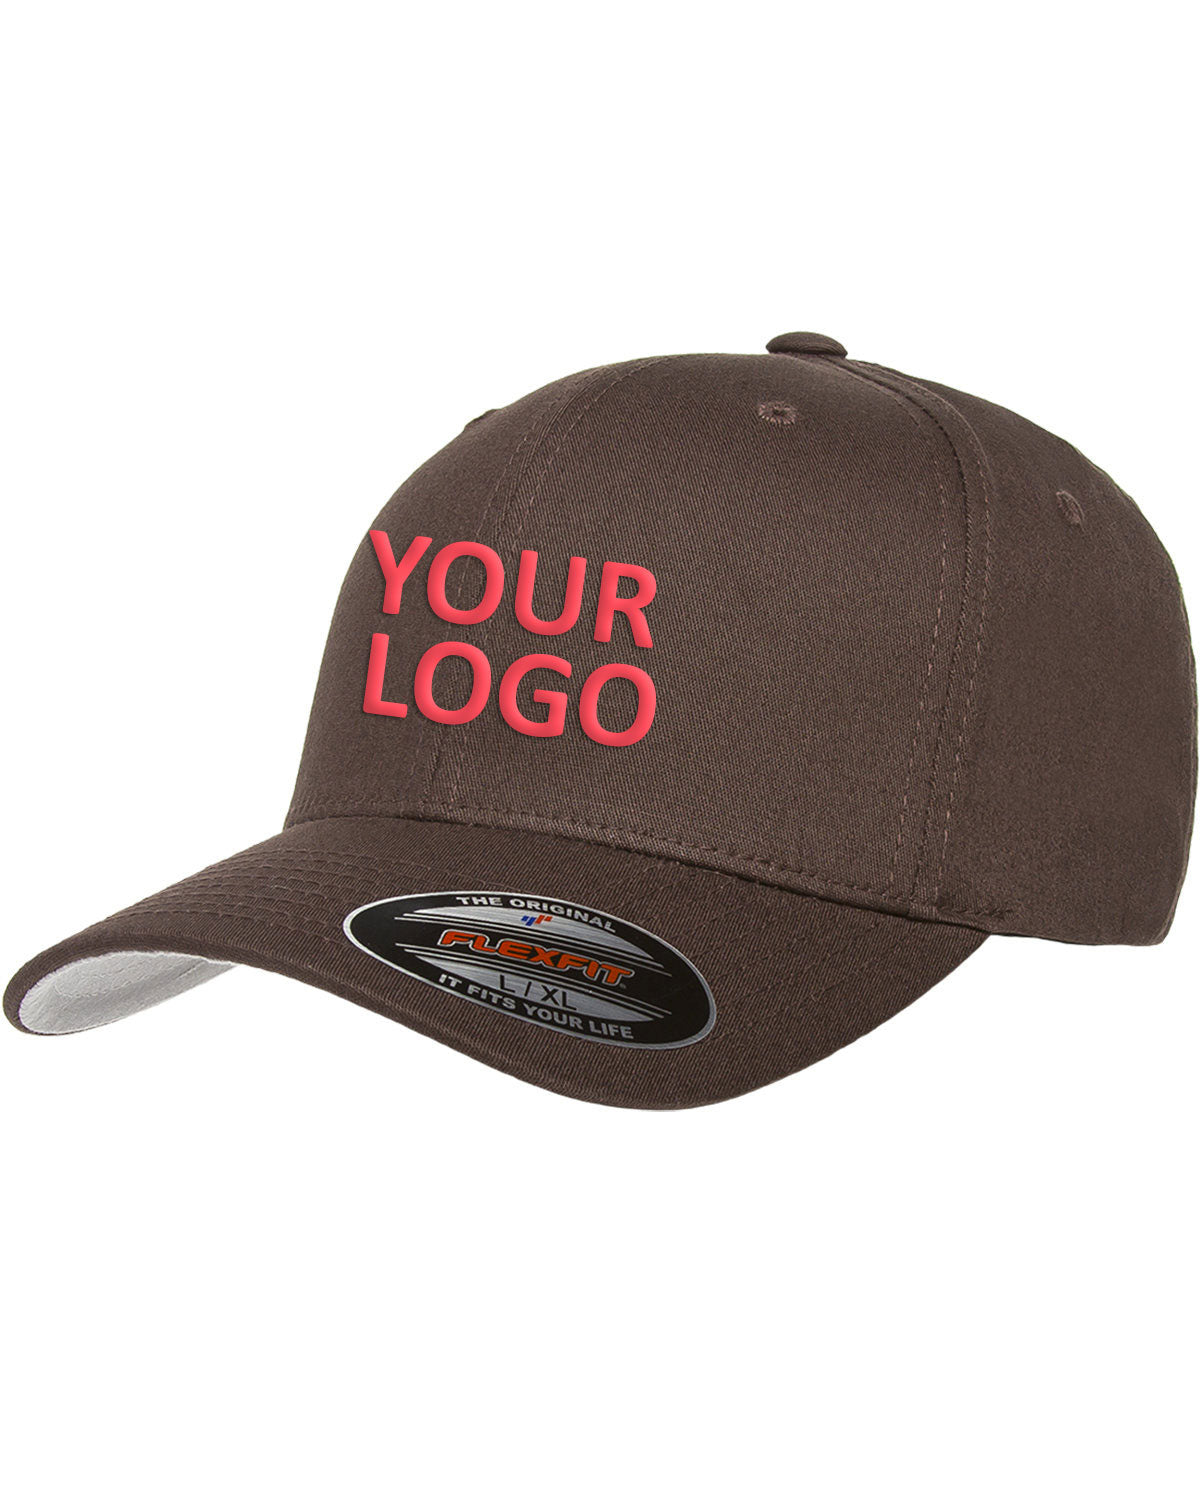 flexfit_5001_brown_company_logo_headwear